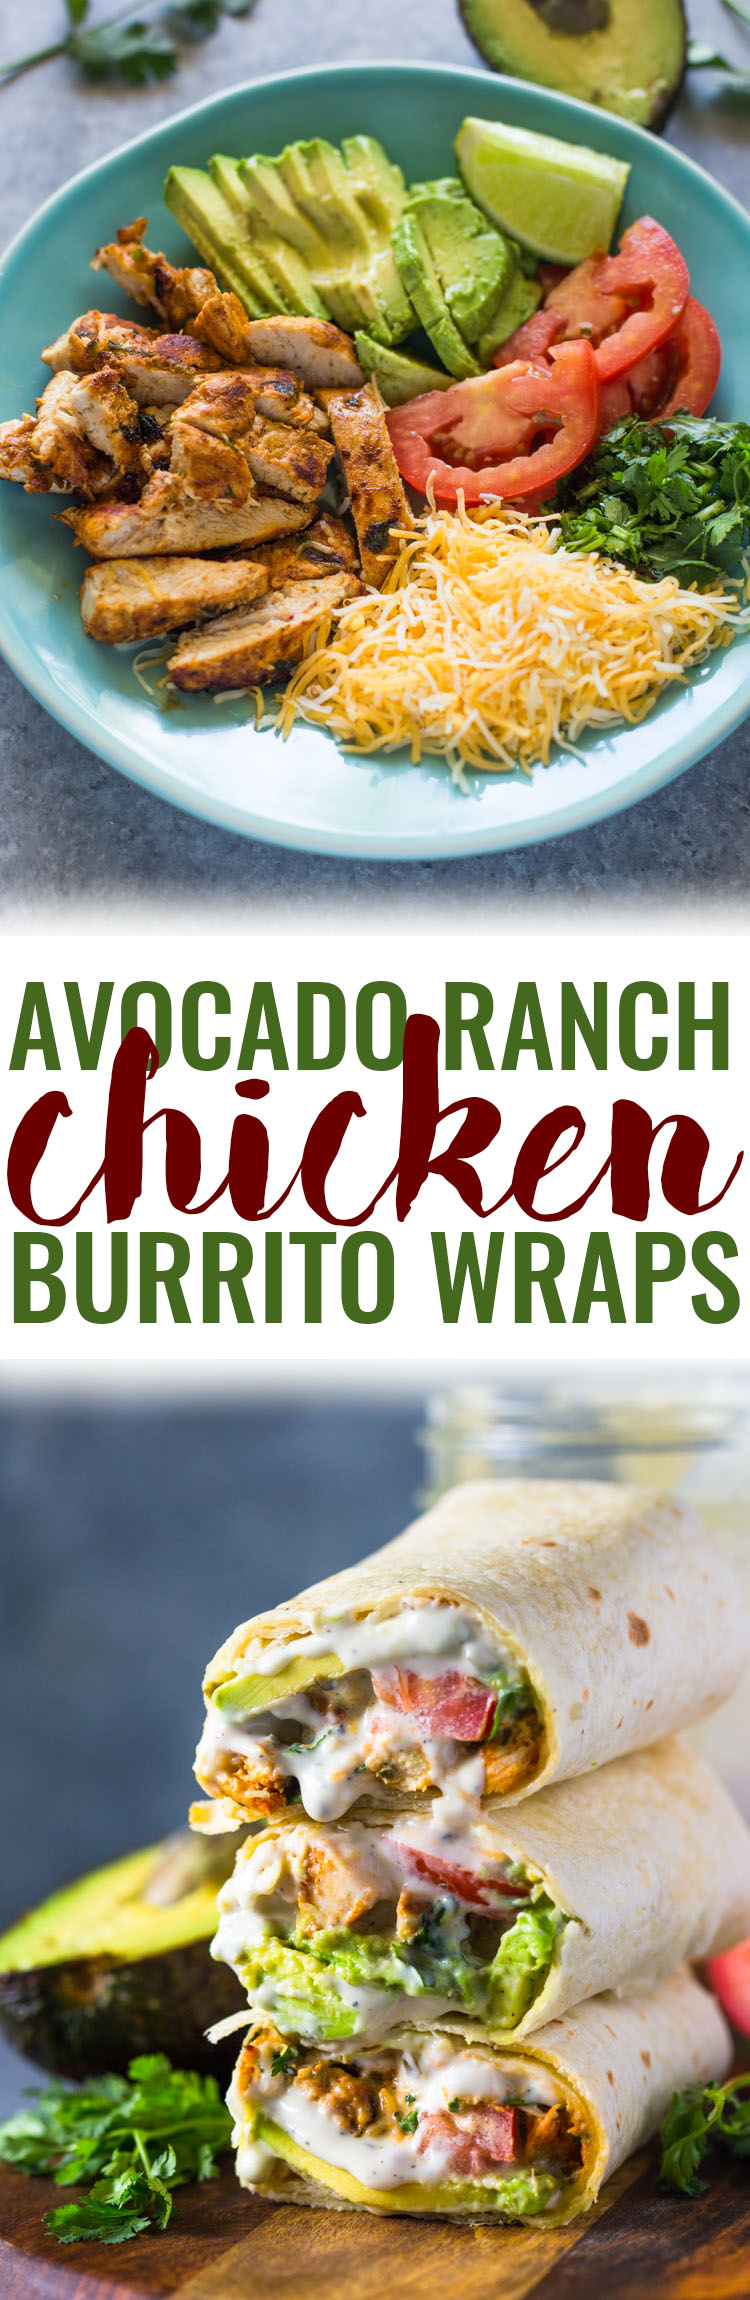 Avocado Ranch Chicken Burrito Wraps